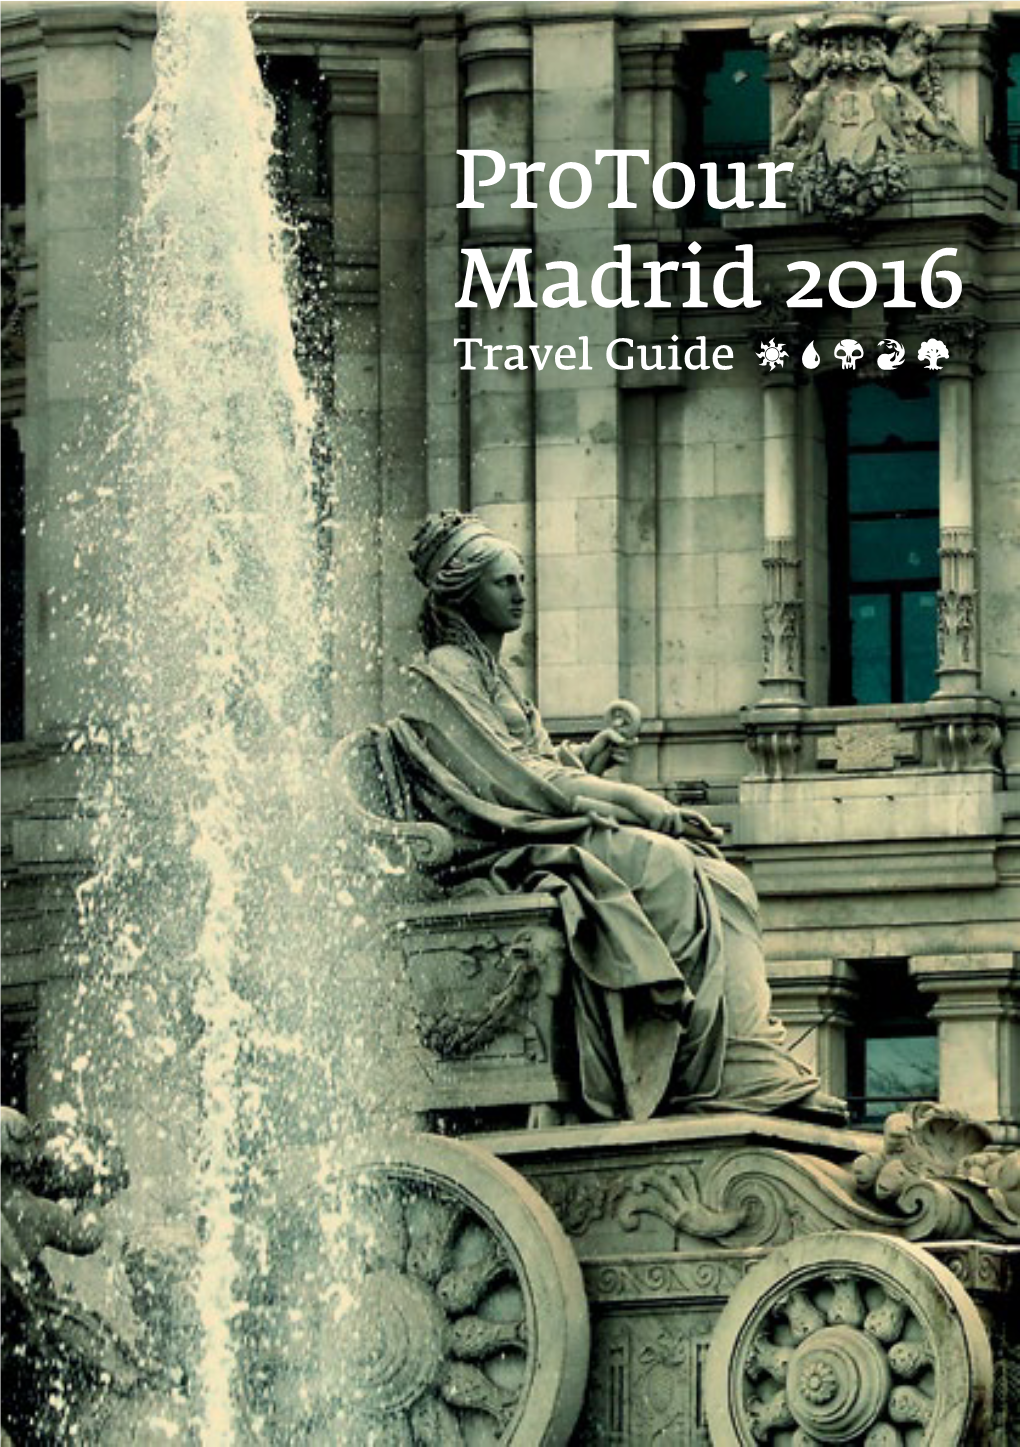 Protour Madrid 2016 Travel Guide 2 Index